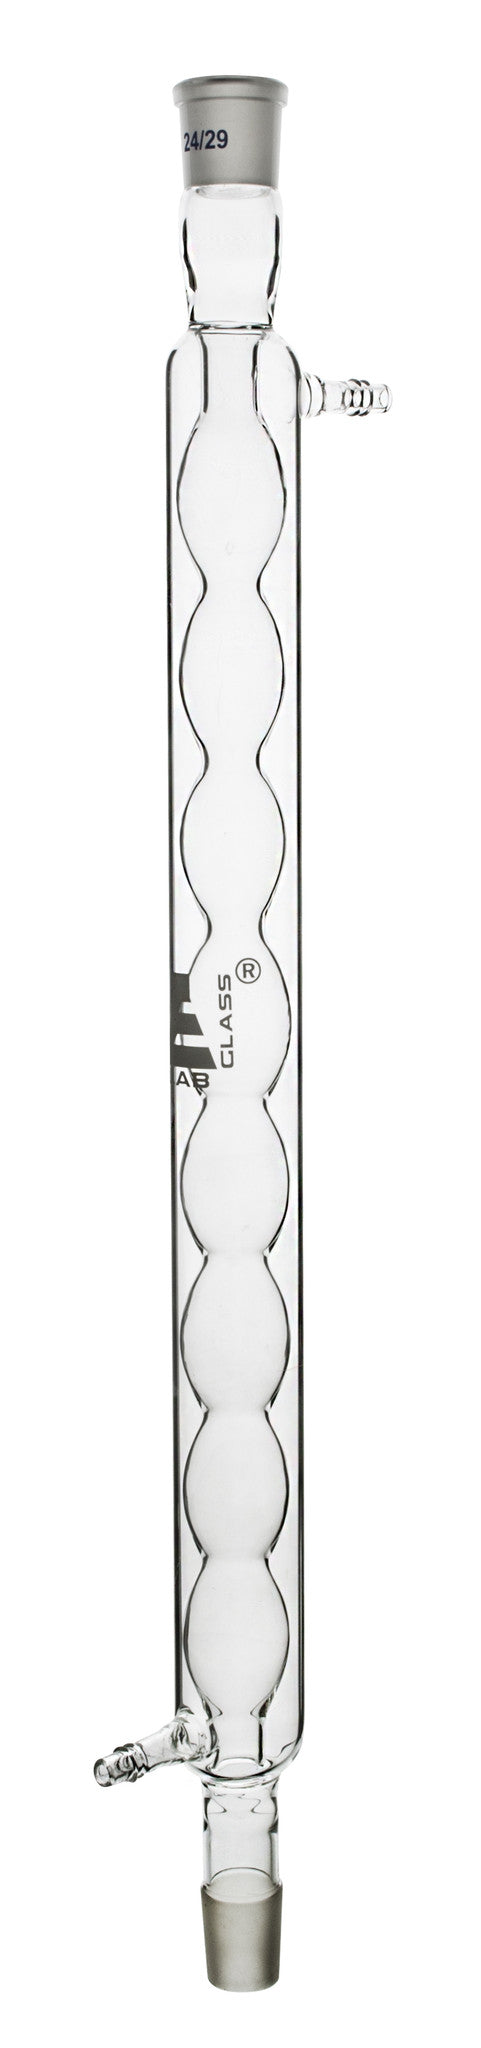 Condenser - Allihn Bulb, Socket size 19/26 & Cone size 19/26, effective length 25mm